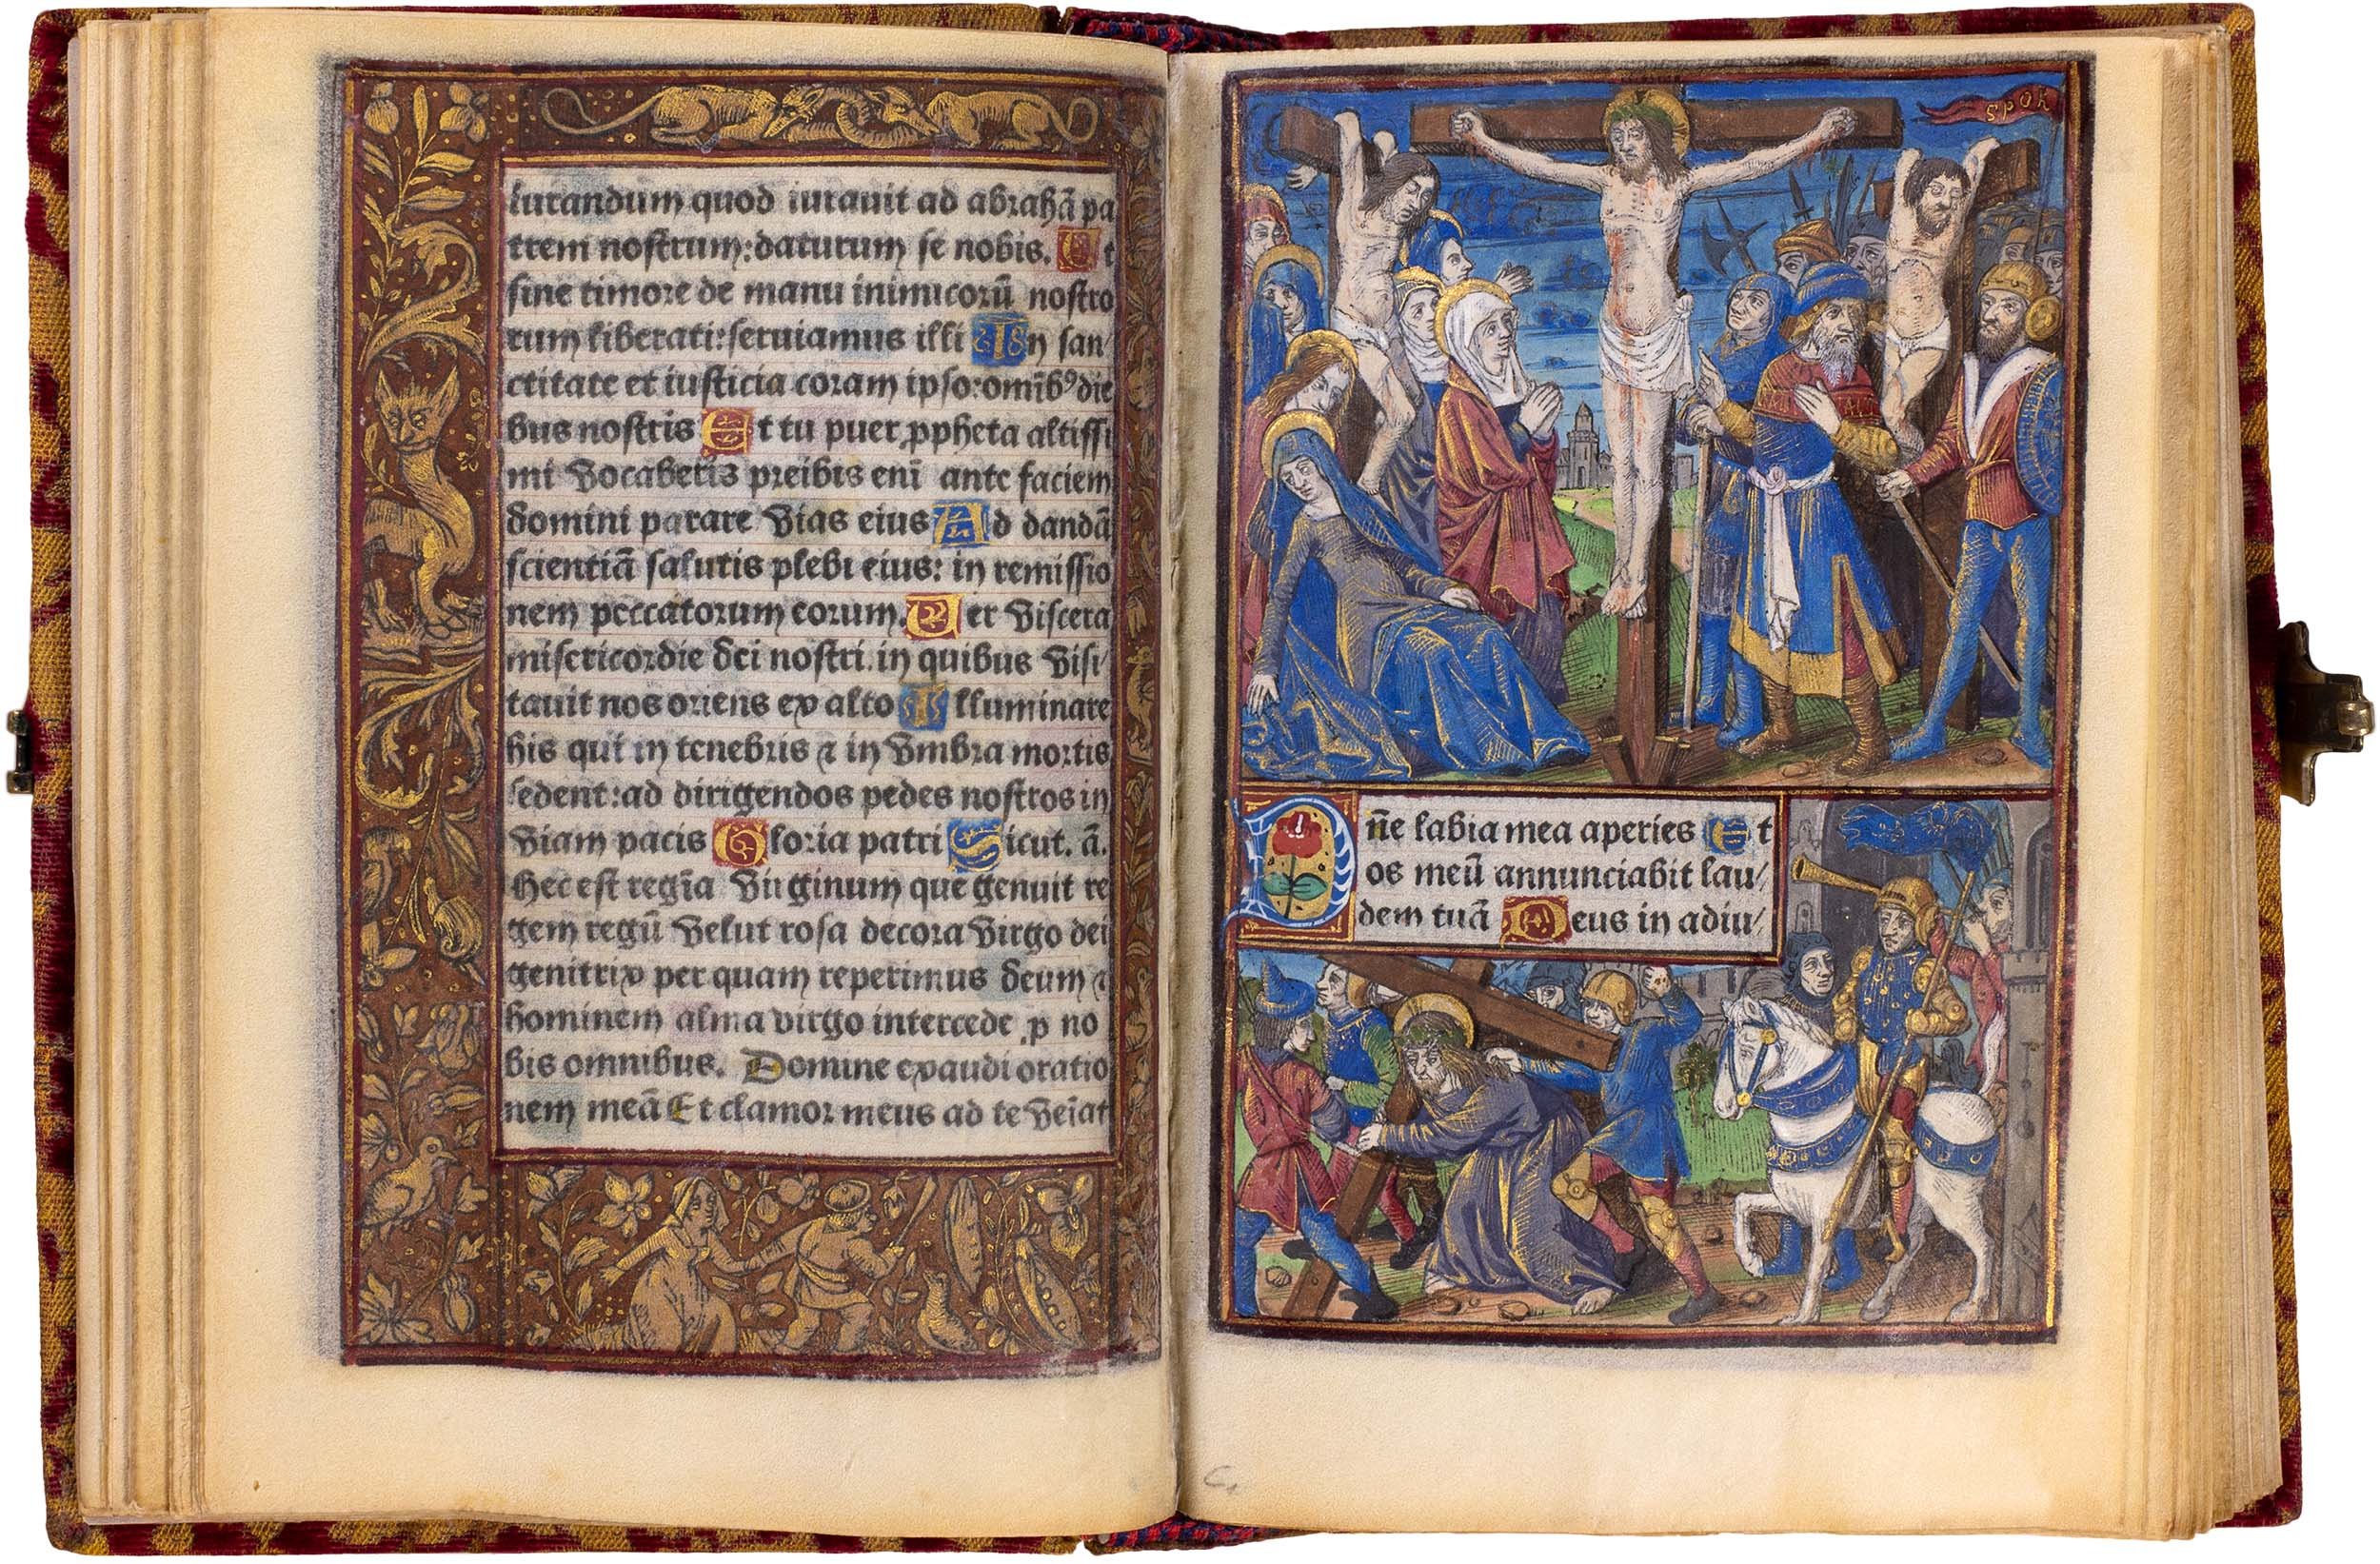 Horae-bmv-1488-gamma-dupre-printed-book-of-hours-danse-macabre-camaieu-dor-illuminated-vellum-copy-43.jpg